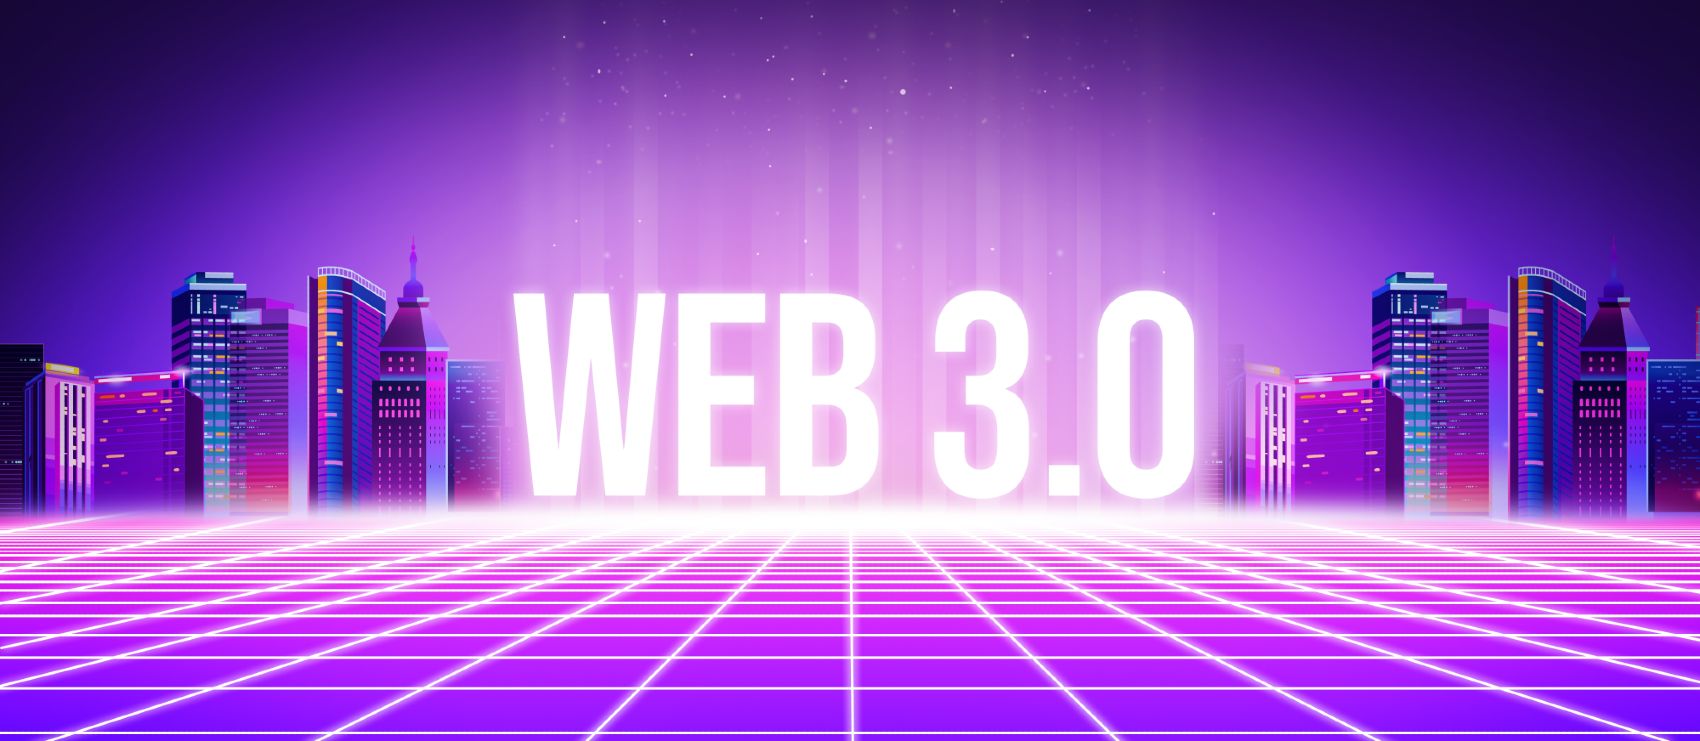 Web 3.0.